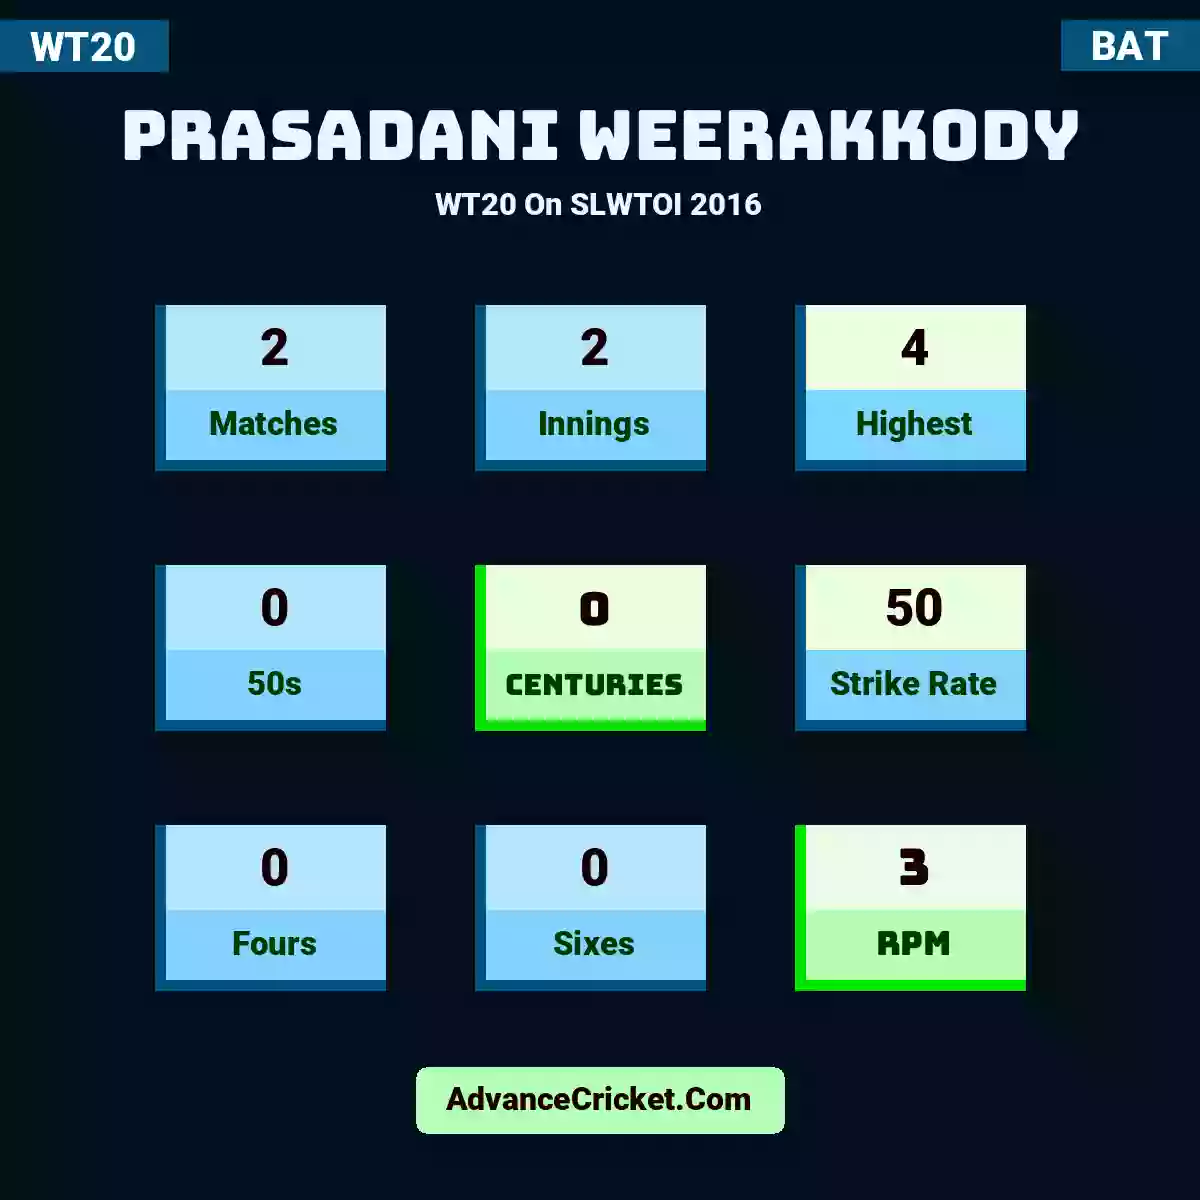 Prasadani Weerakkody WT20  On SLWTOI 2016, Prasadani Weerakkody played 2 matches, scored 4 runs as highest, 0 half-centuries, and 0 centuries, with a strike rate of 50. P.Weerakkody hit 0 fours and 0 sixes, with an RPM of 3.